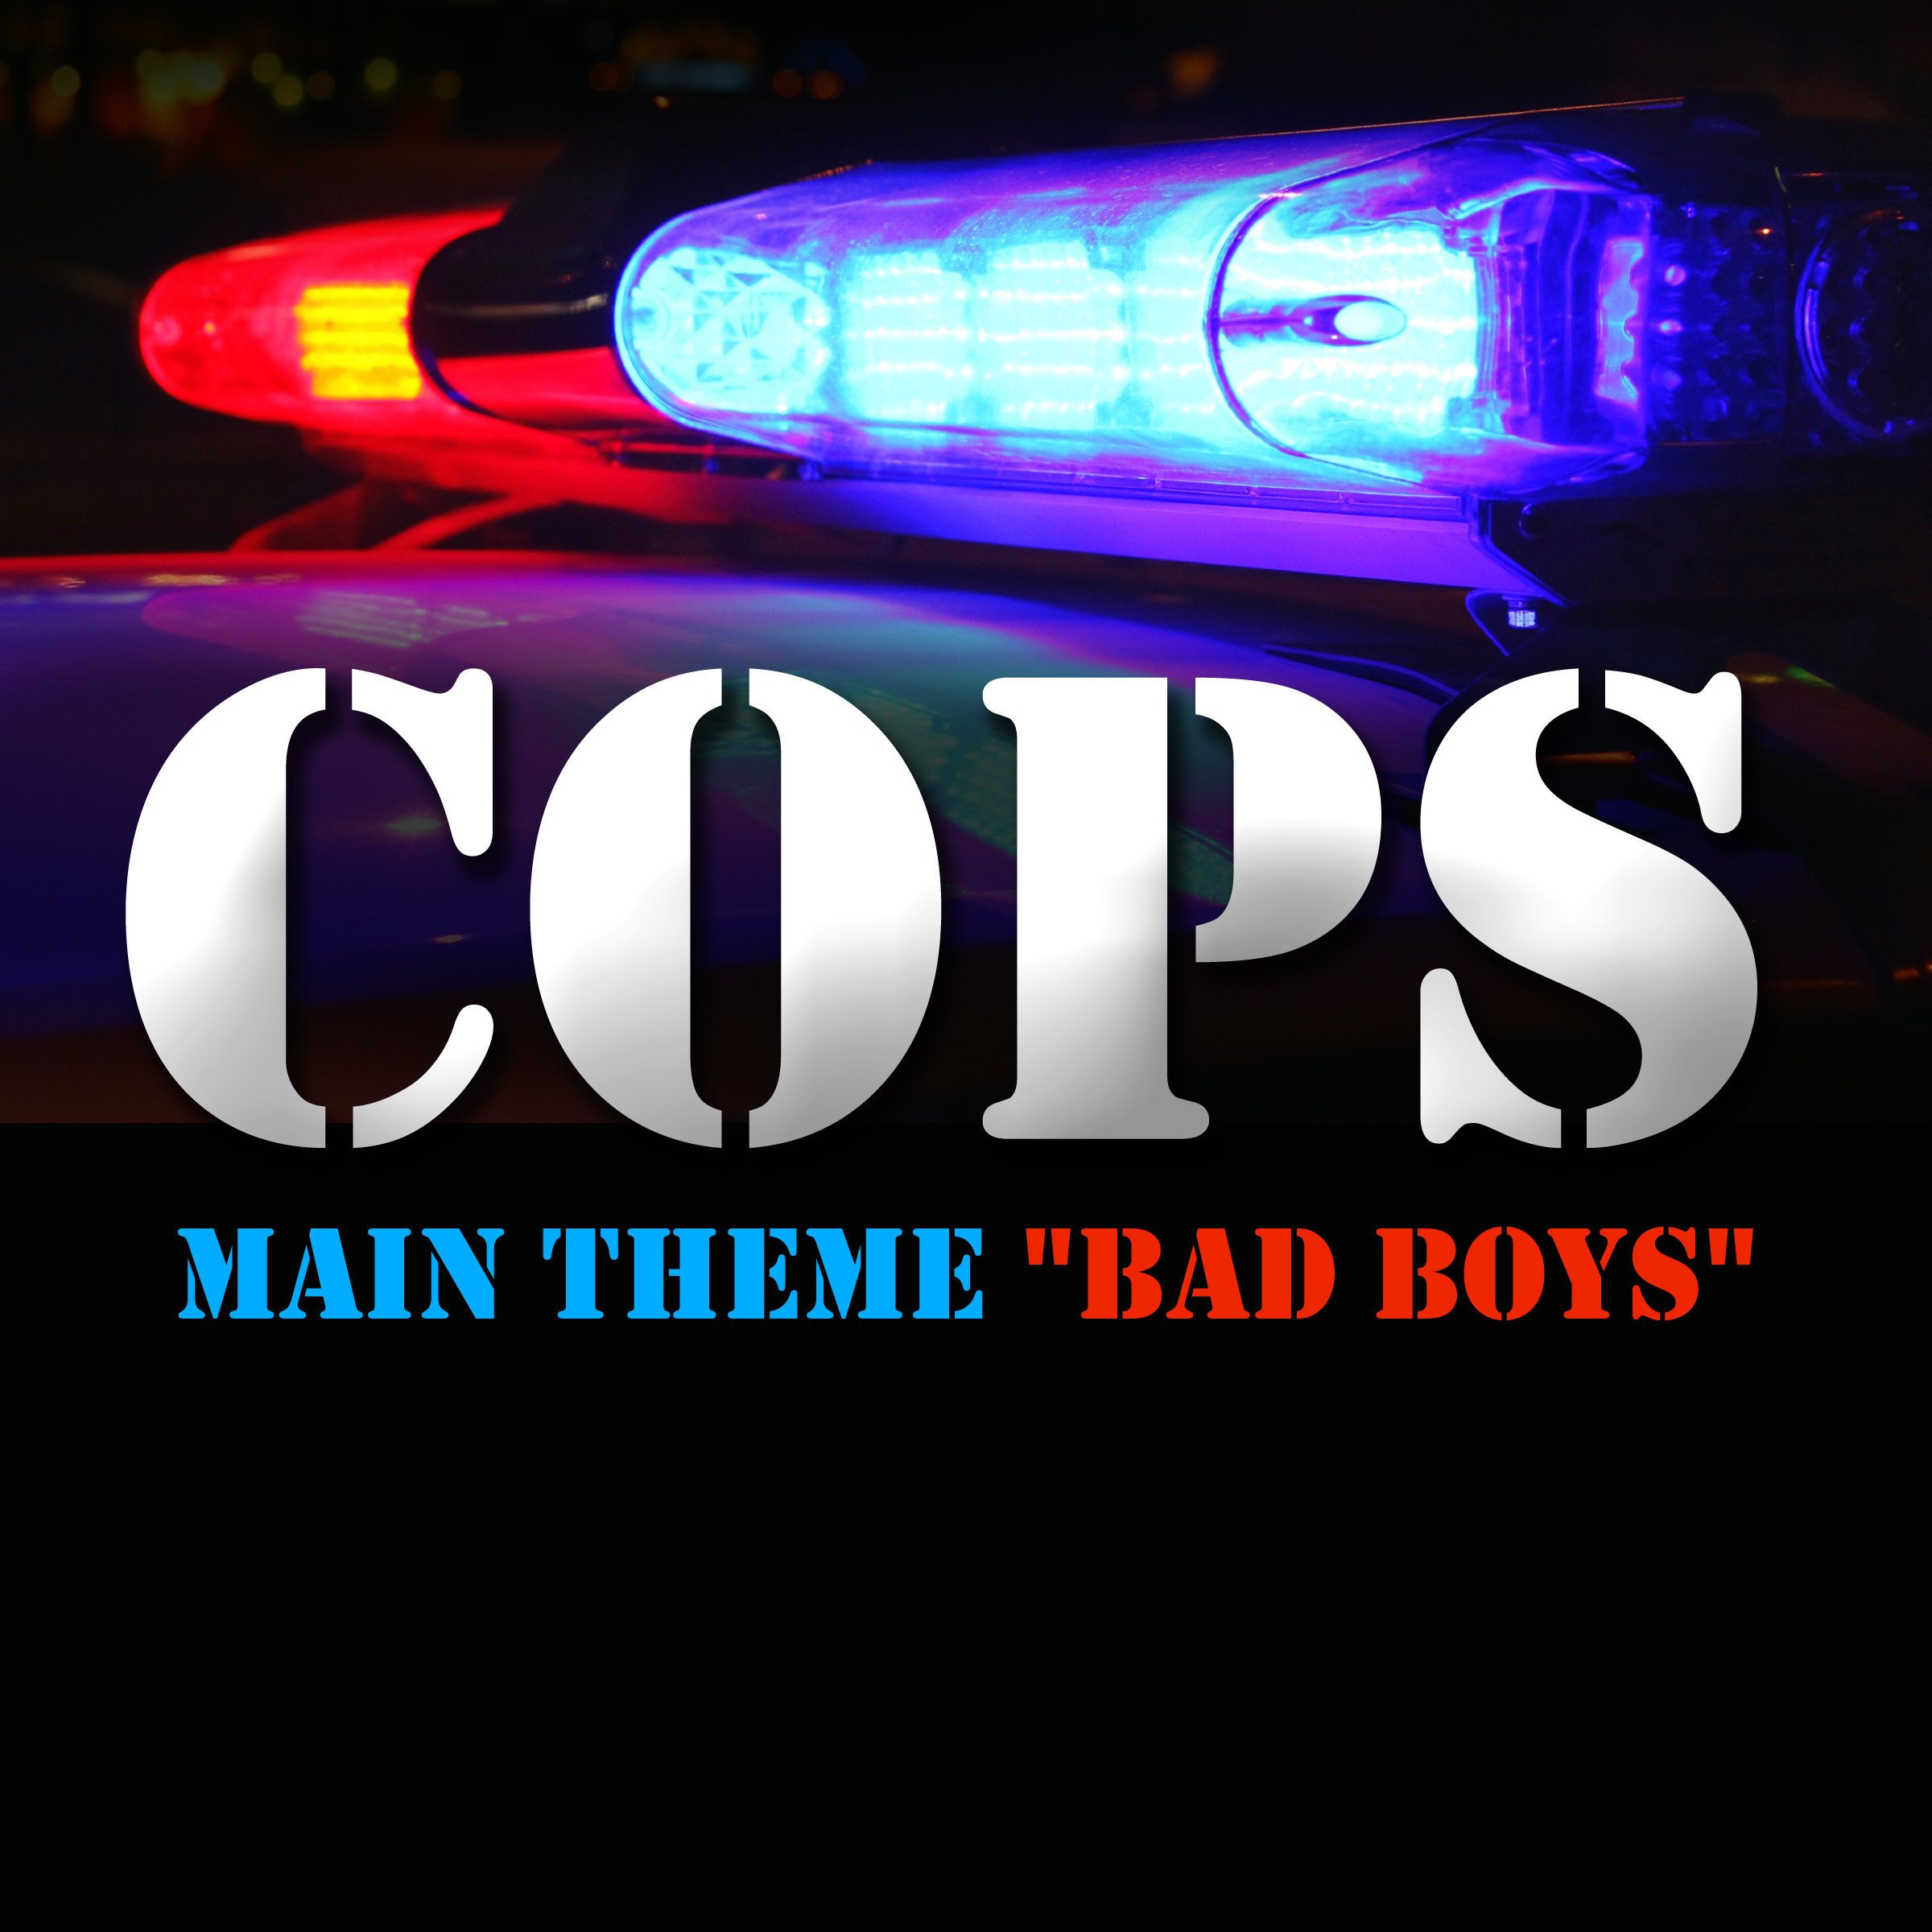 Boys theme. Bad boys Theme from cops. Bad boys (Theme from cops) Inner circle. Theme from cops. Bad boys (Theme from cops) [Psychemagik Remix].